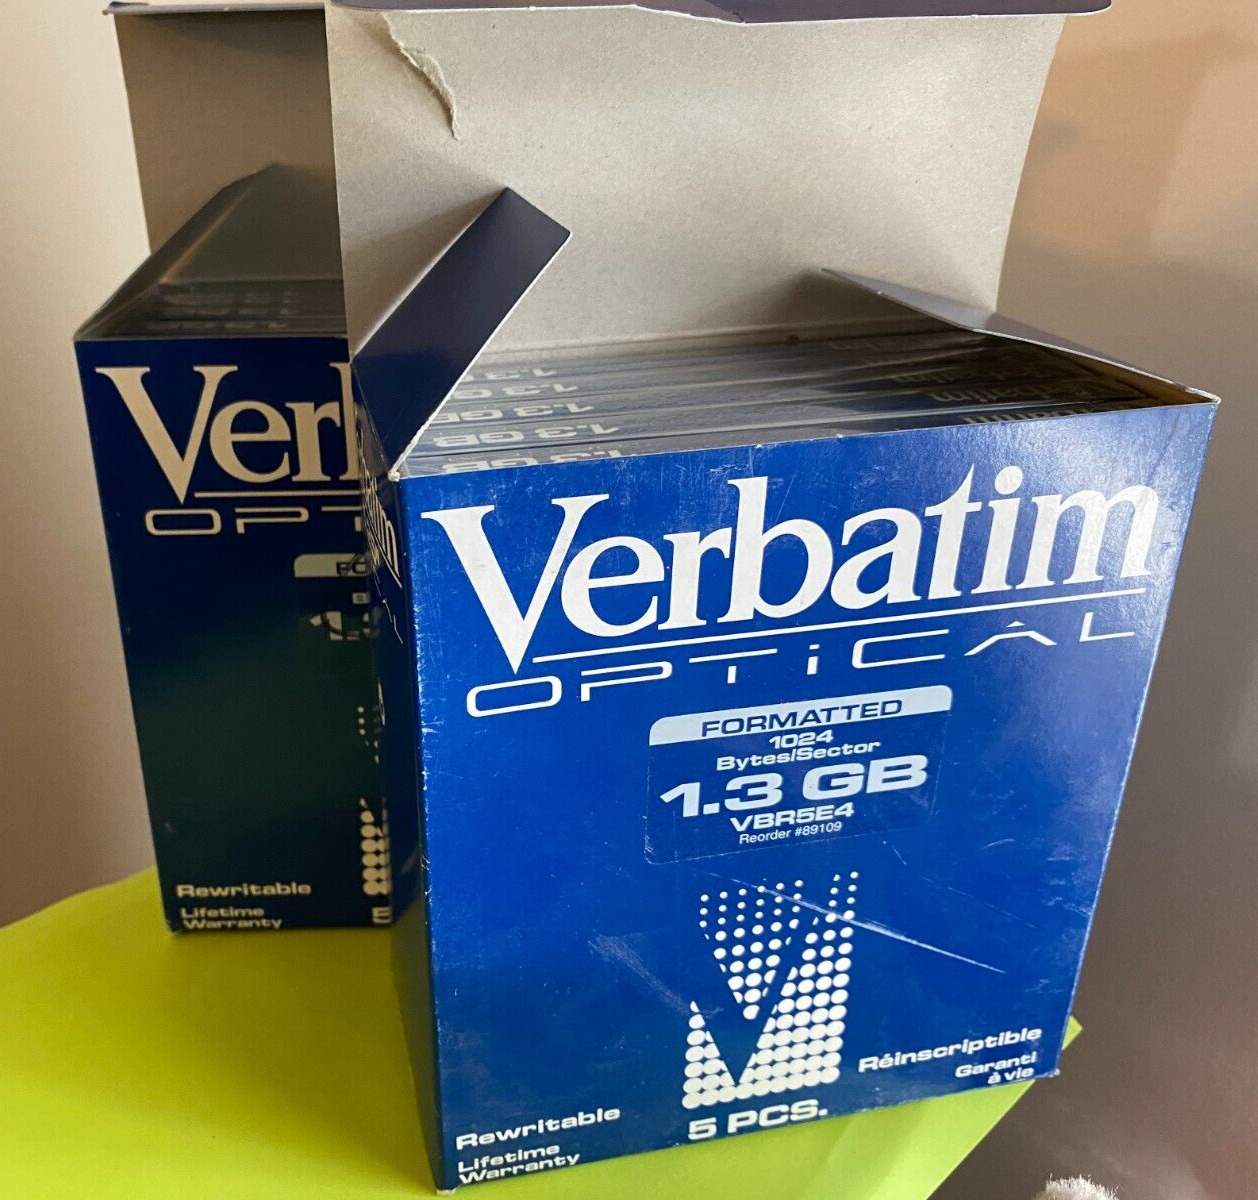 Lot of 10 - Brand new Verbatim VBR5E4 5.25